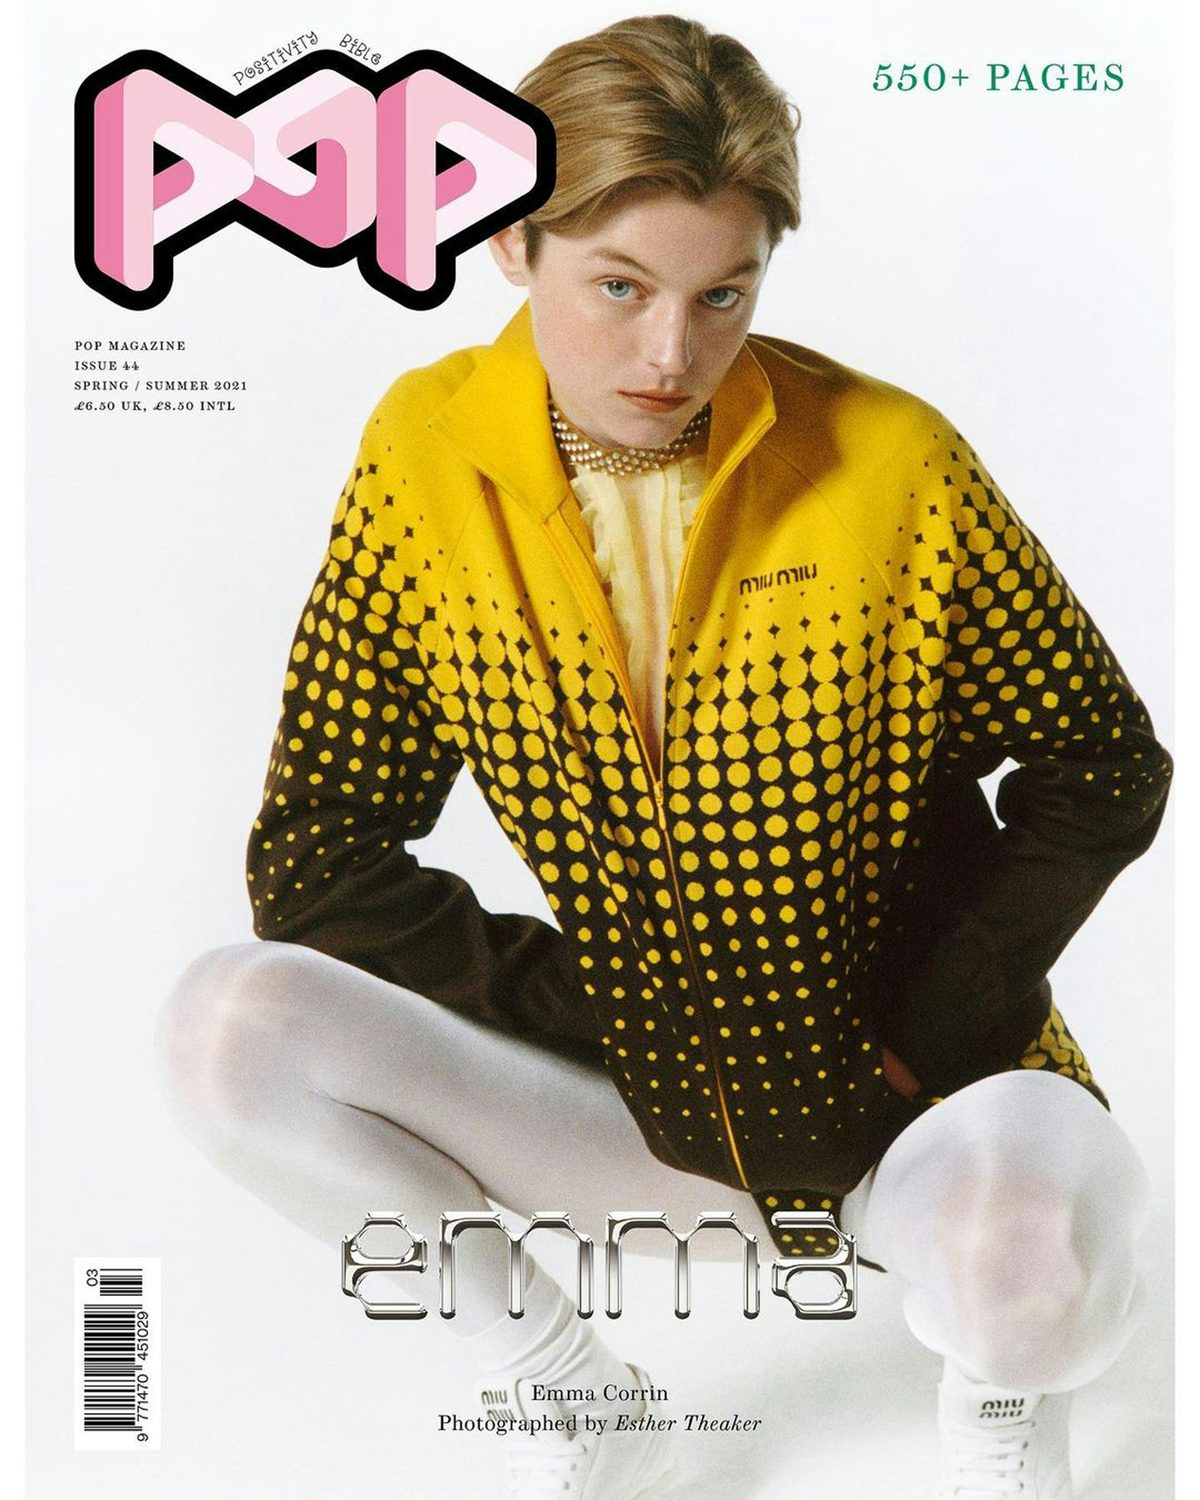 04/09/2014: Minimalist pop culture icons – PRINT Magazine